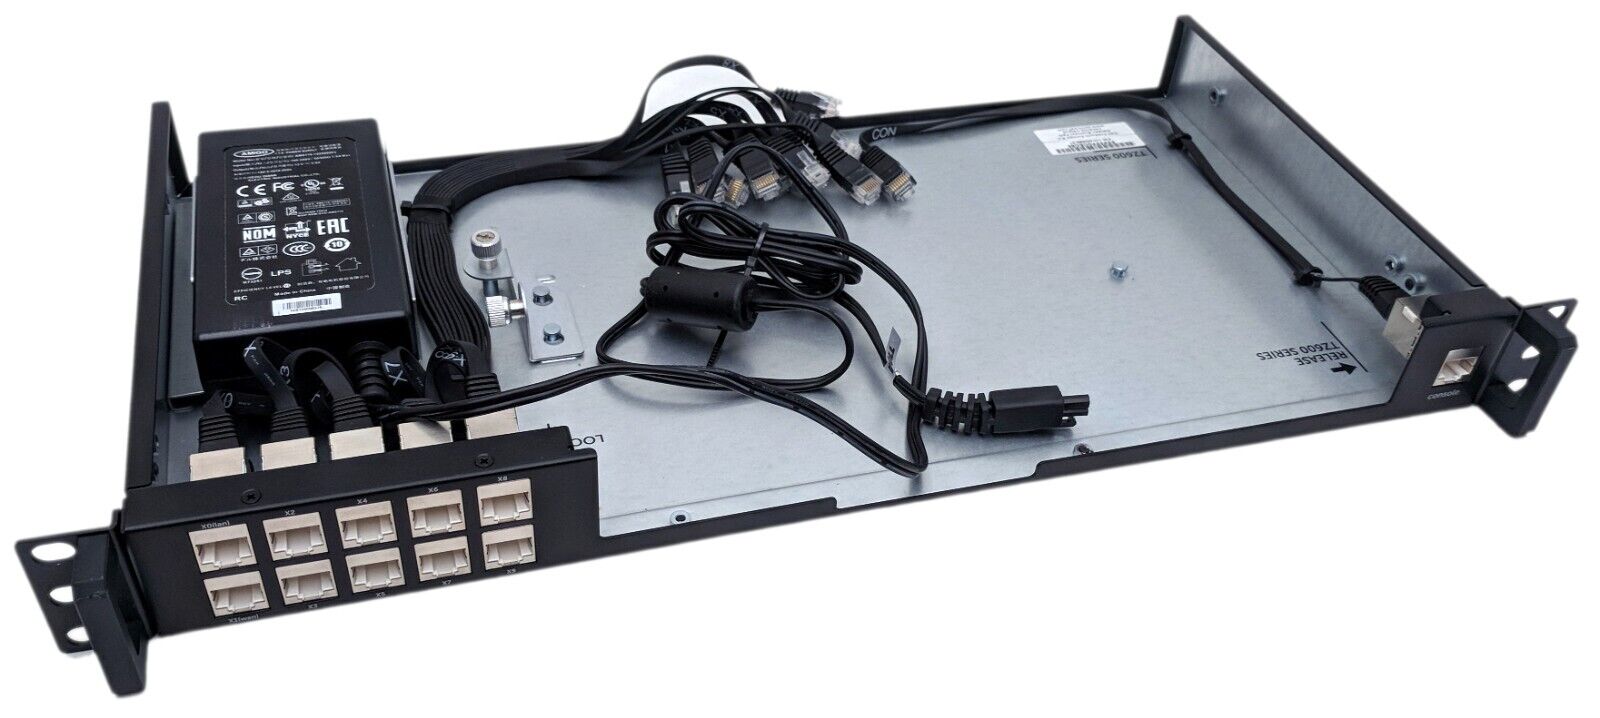 SonicWall TZ600 Series Network & Firewall Device Rack Mount Kit w/ Power Supply